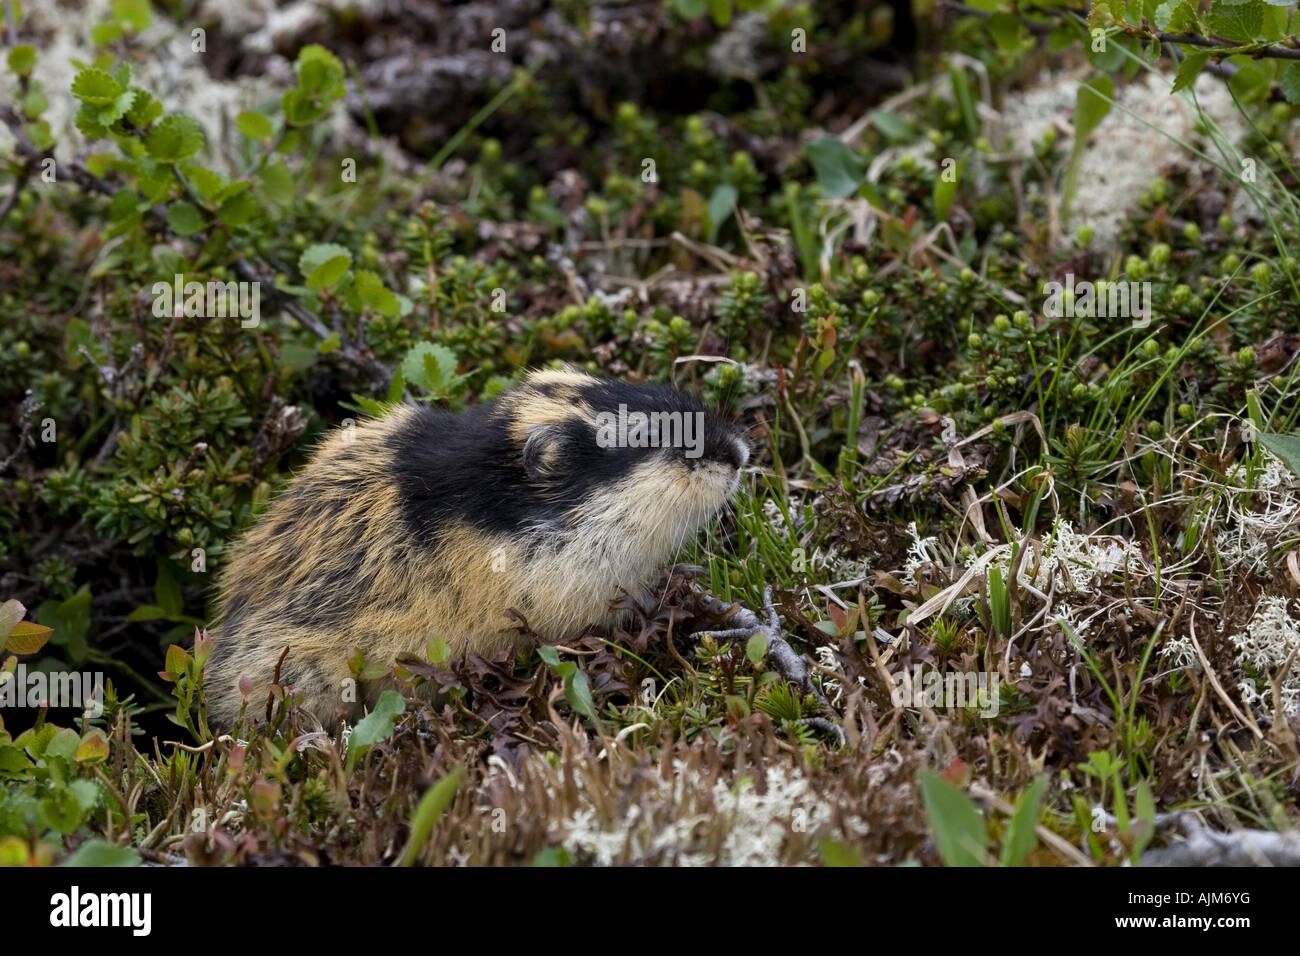 Norway lemming (Lemmus lemmus), in habitat, Norway Stock Photo